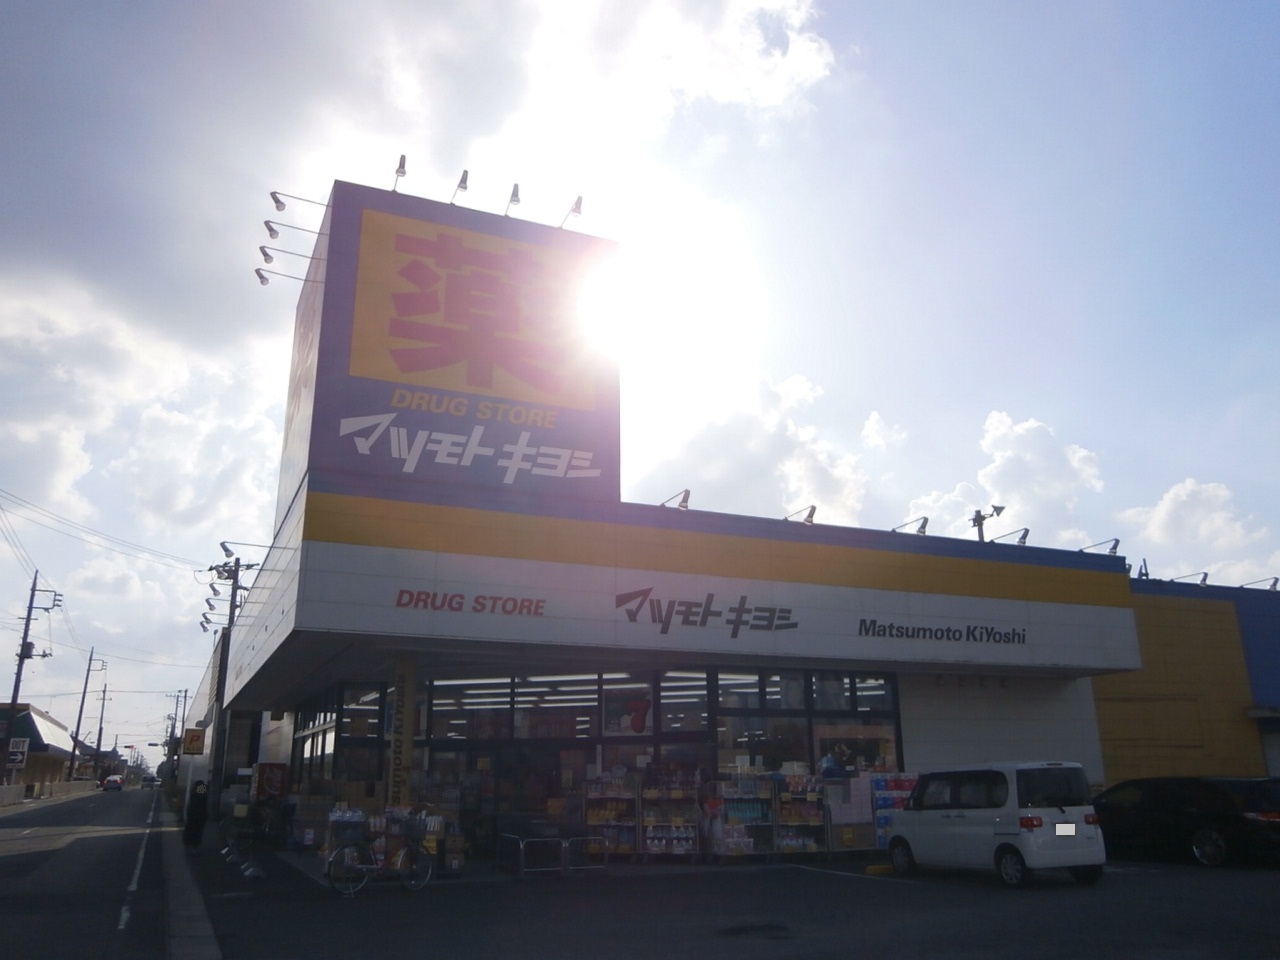 Dorakkusutoa. Matsumotokiyoshi drugstore Kamisu store (drugstore) to 400m